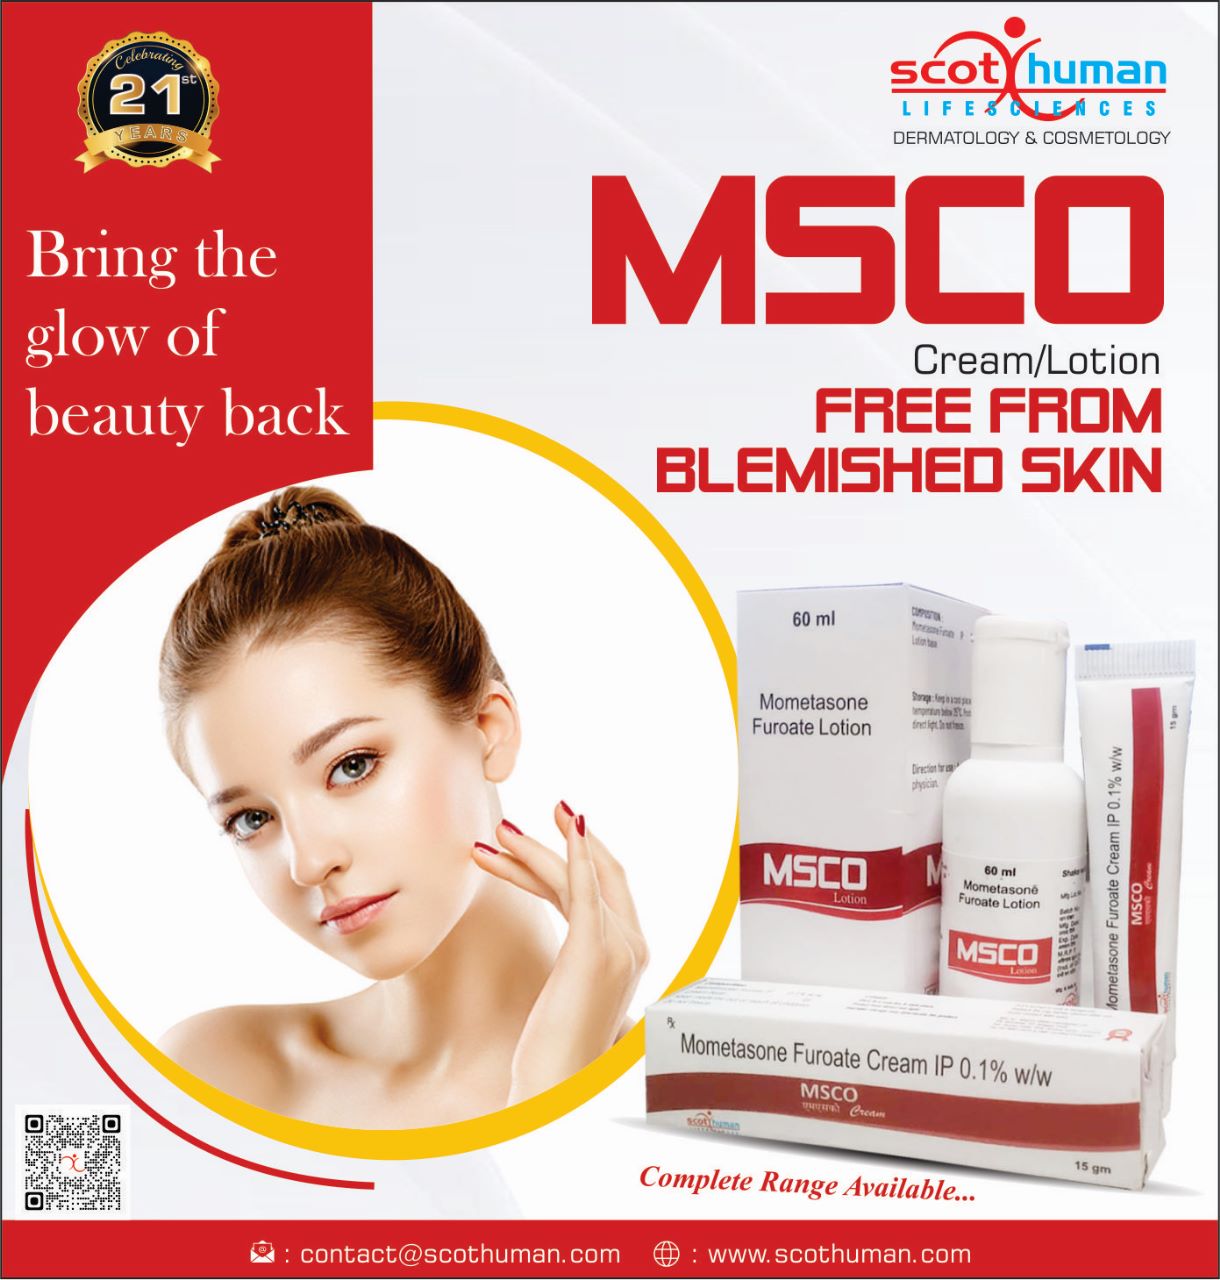 Product Name: Msco, Compositions of Msco are Mometasone Furoate Cream IP 0.1% w/w - Pharma Drugs and Chemicals